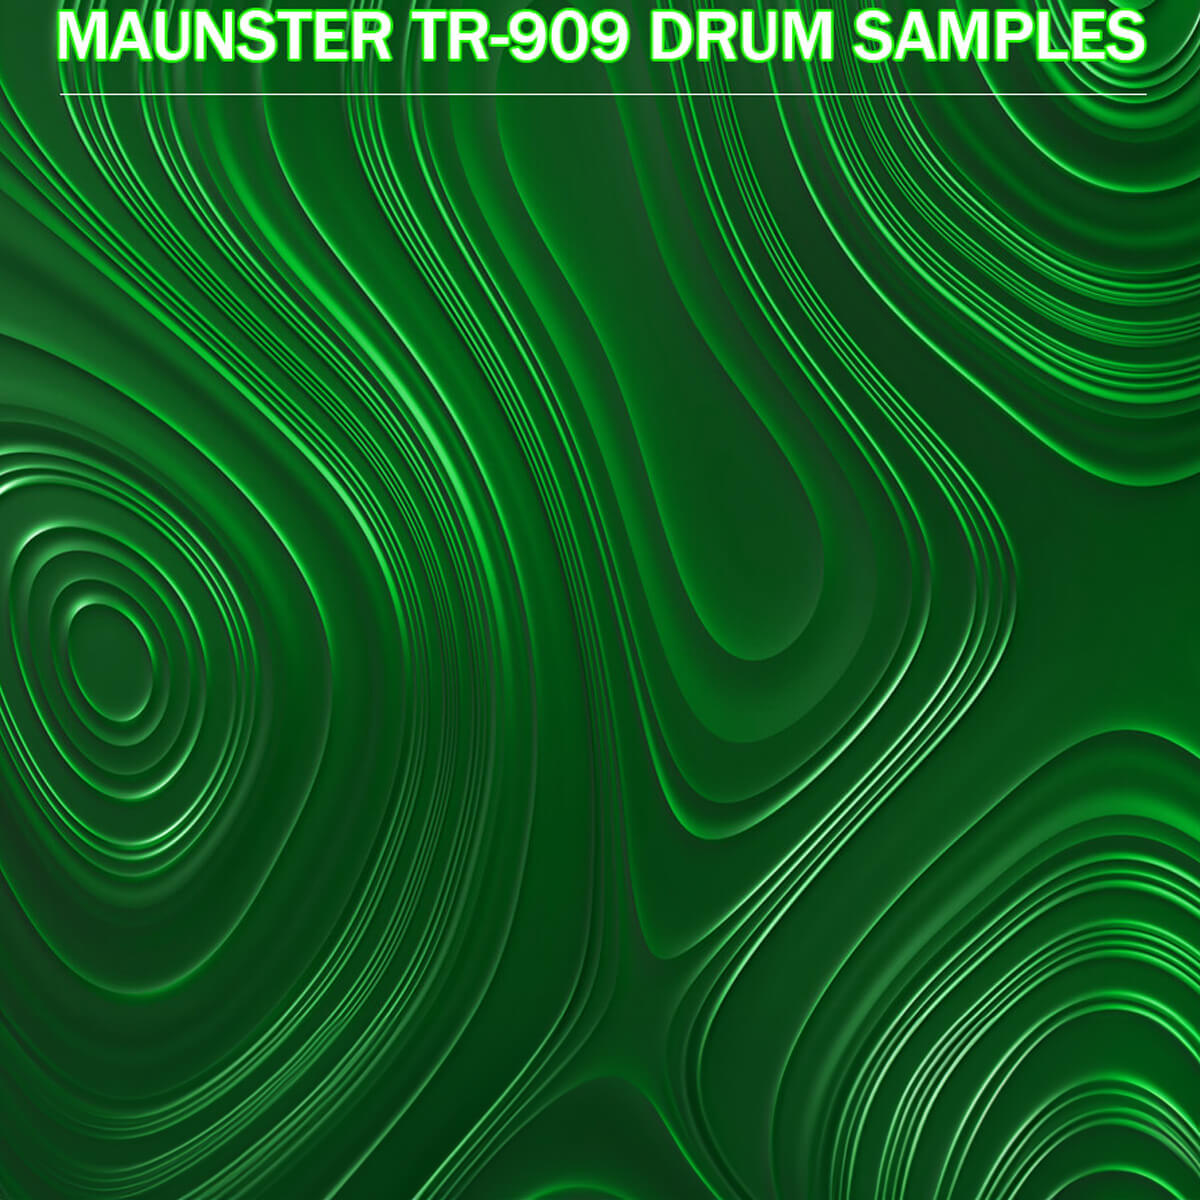 Maunster TR-909 Drum Samples